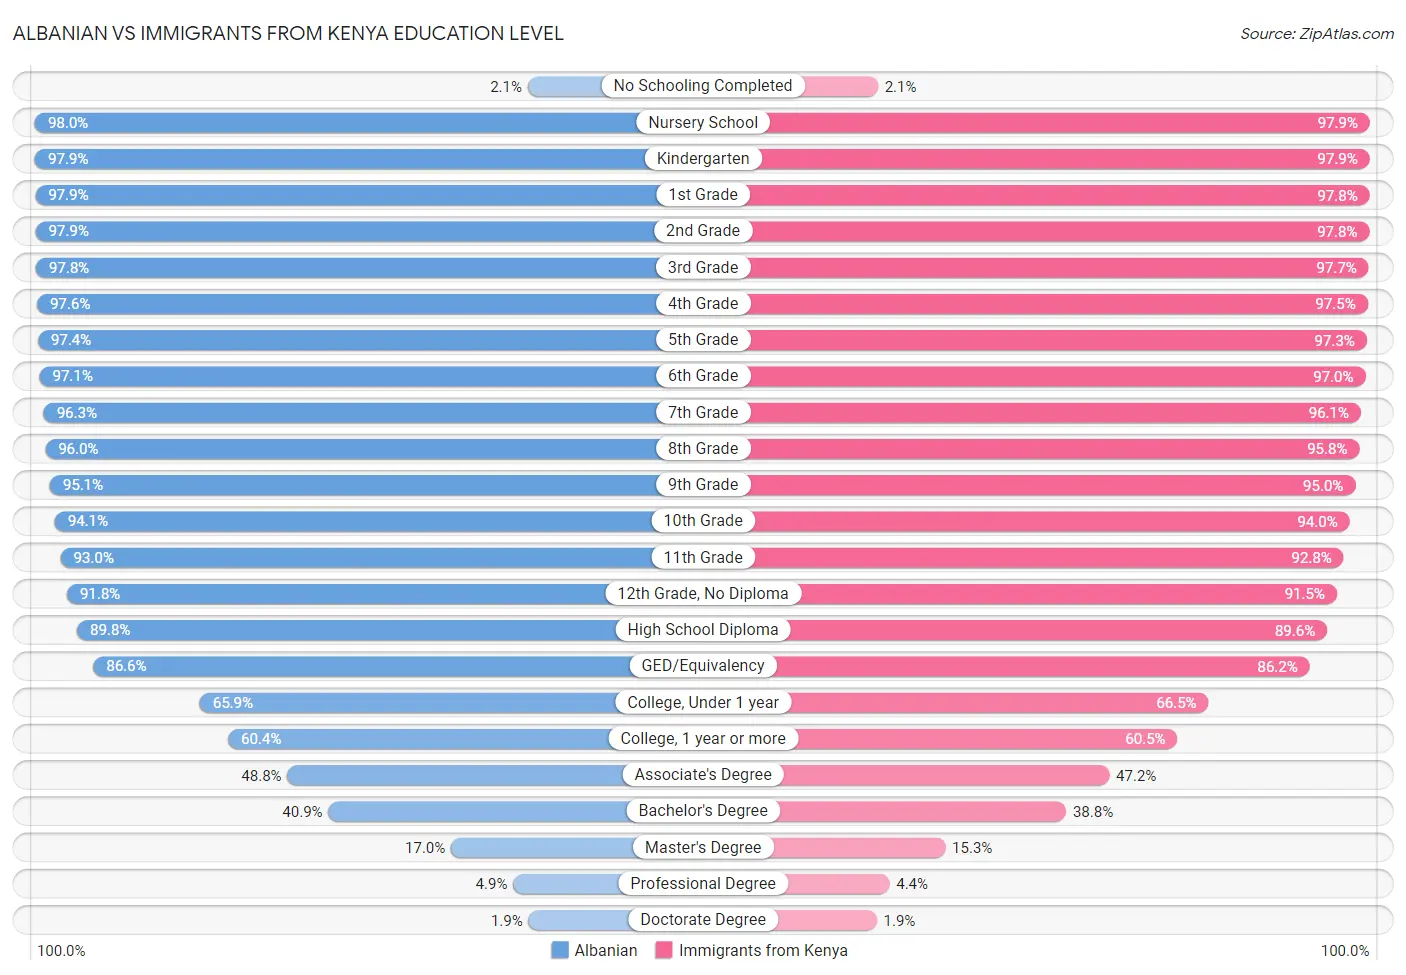 Albanian vs Immigrants from Kenya Education Level